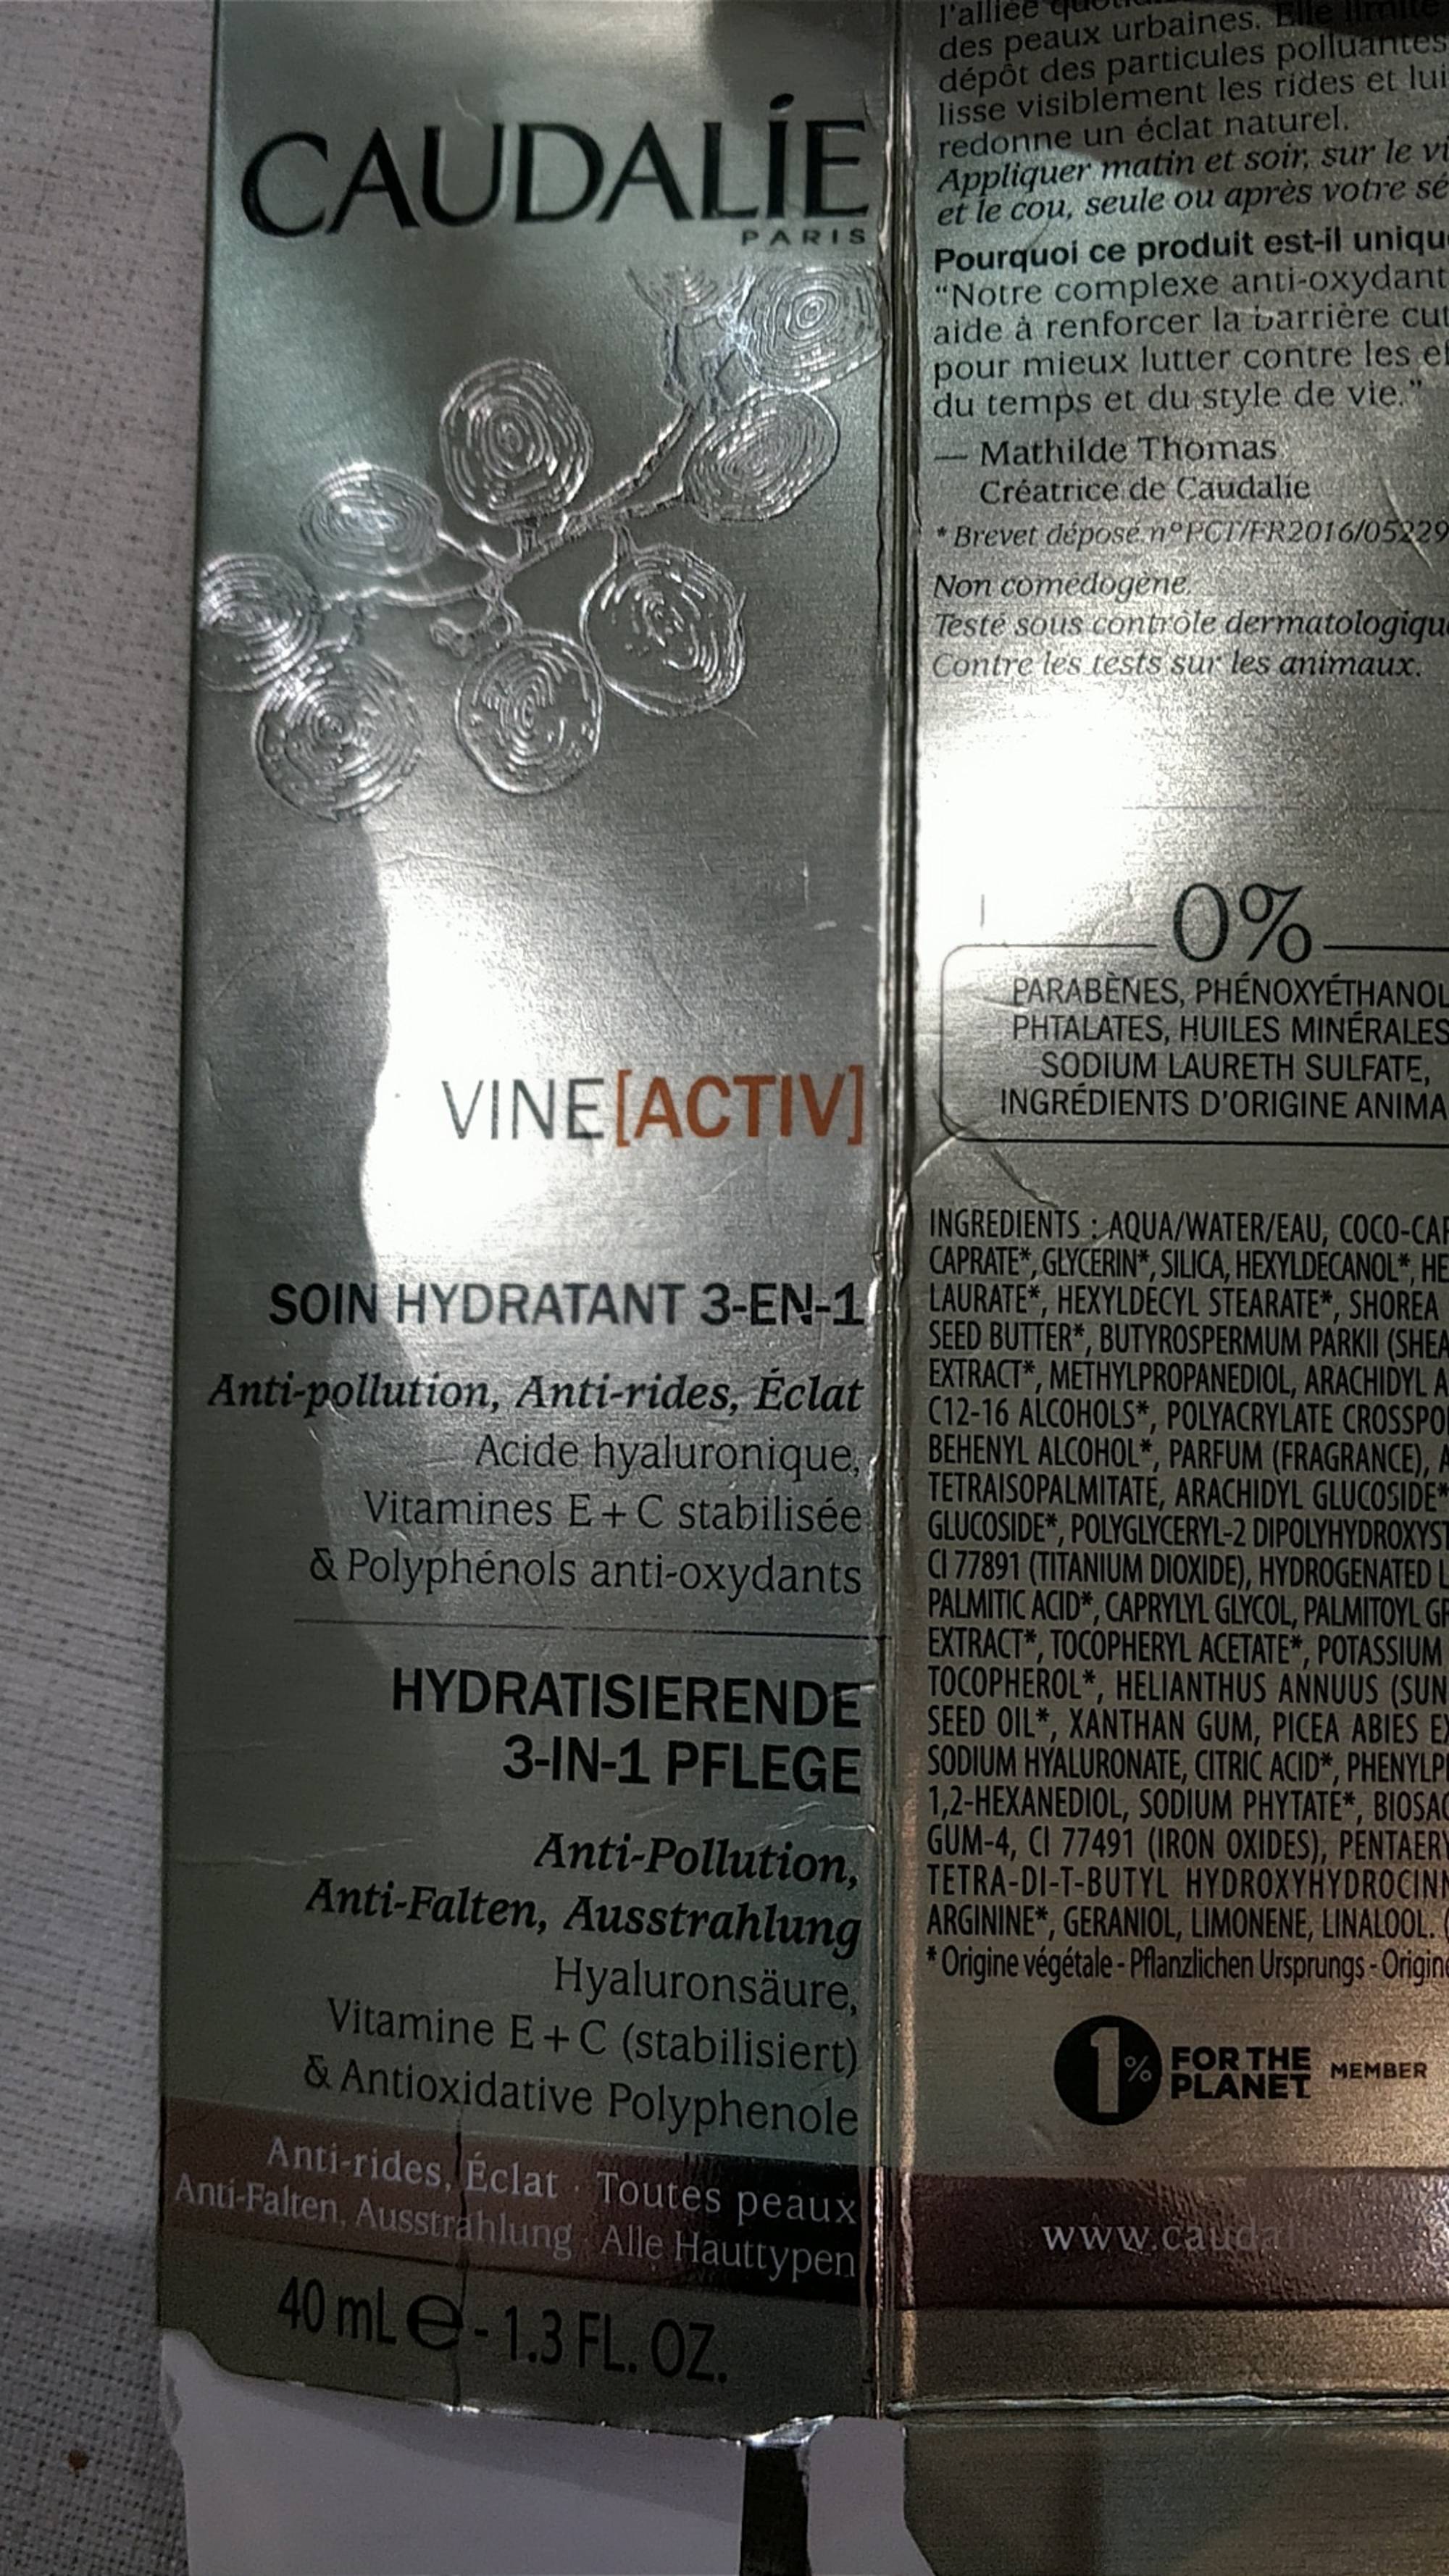 CAUDALIE - Vine activ - Soin hydratant 3-en-1